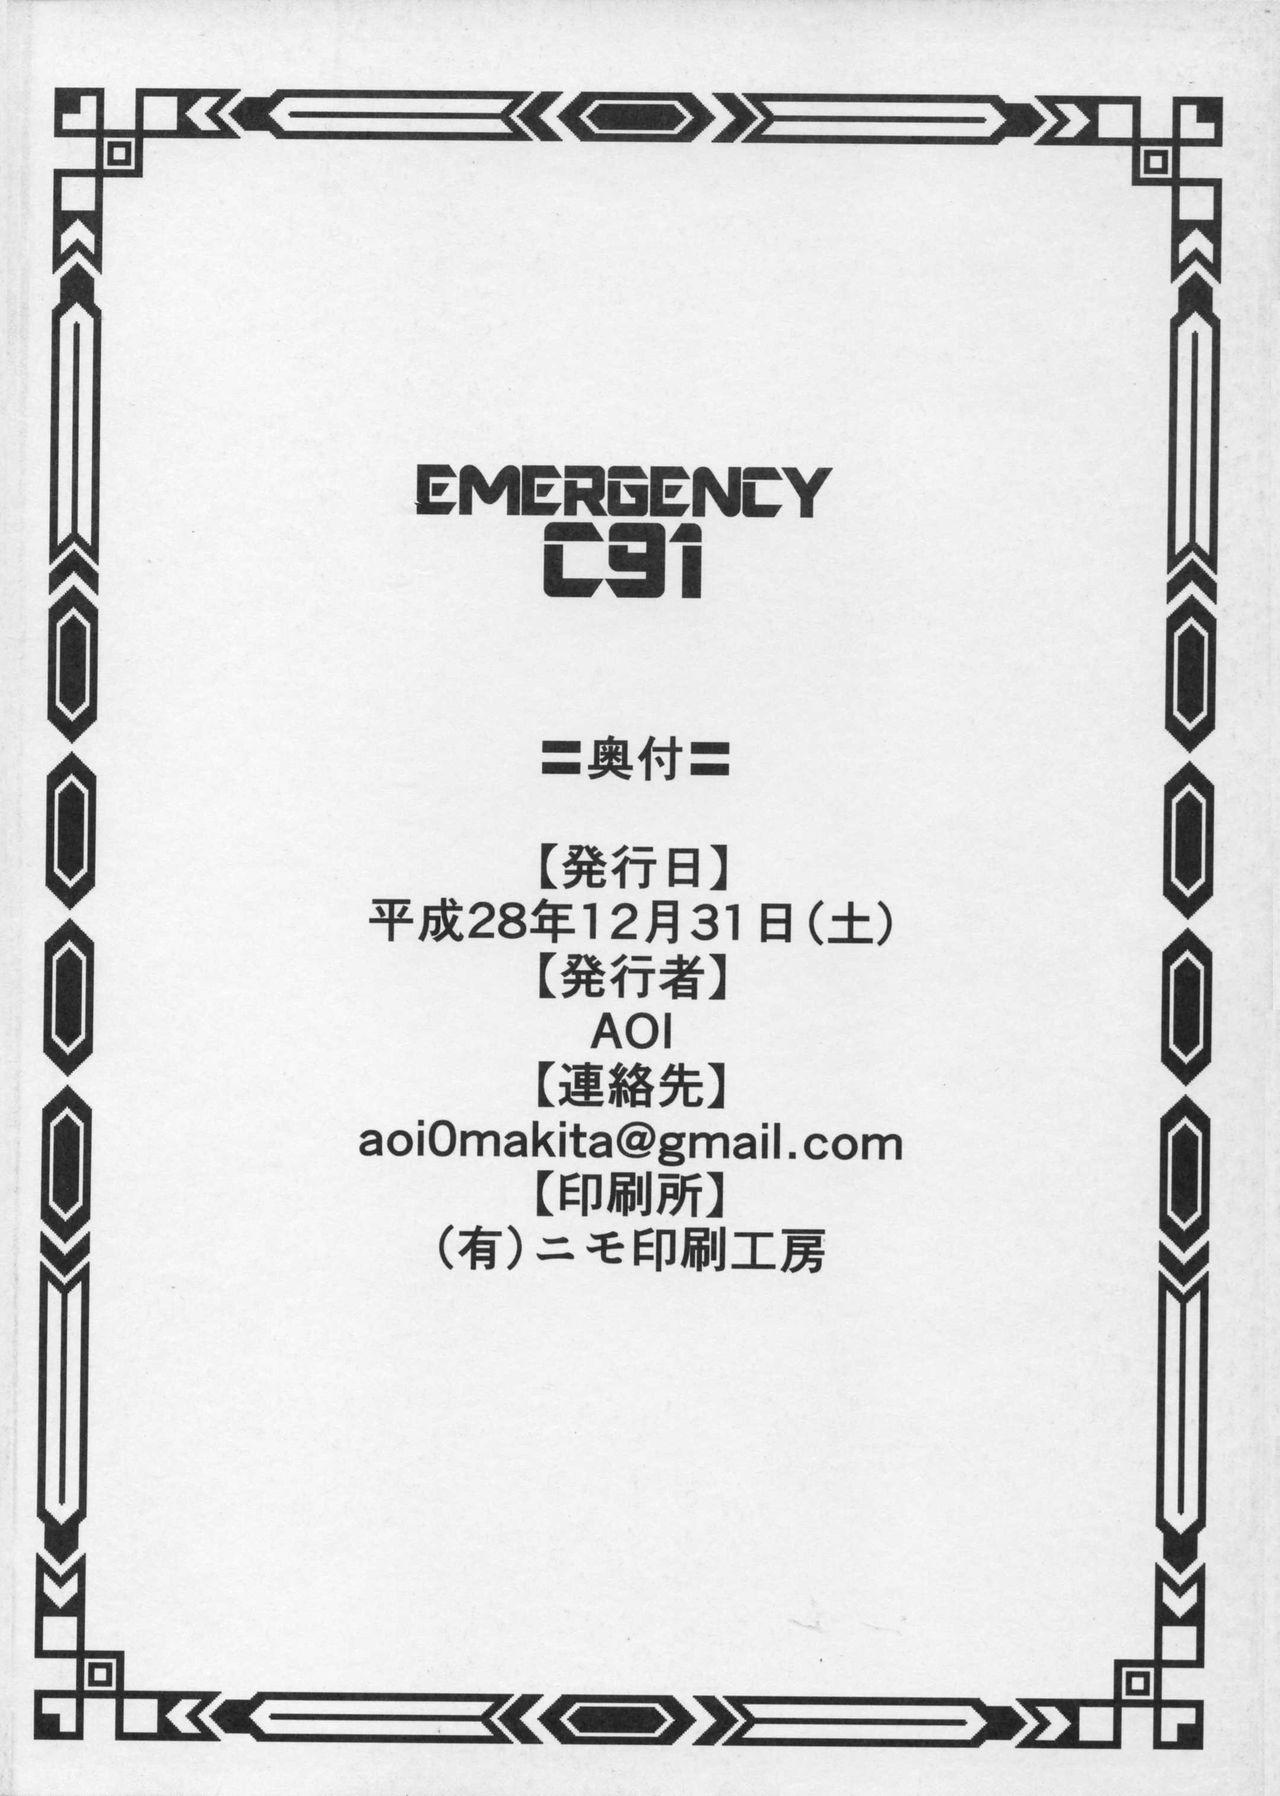 EMERGENCY C91 21